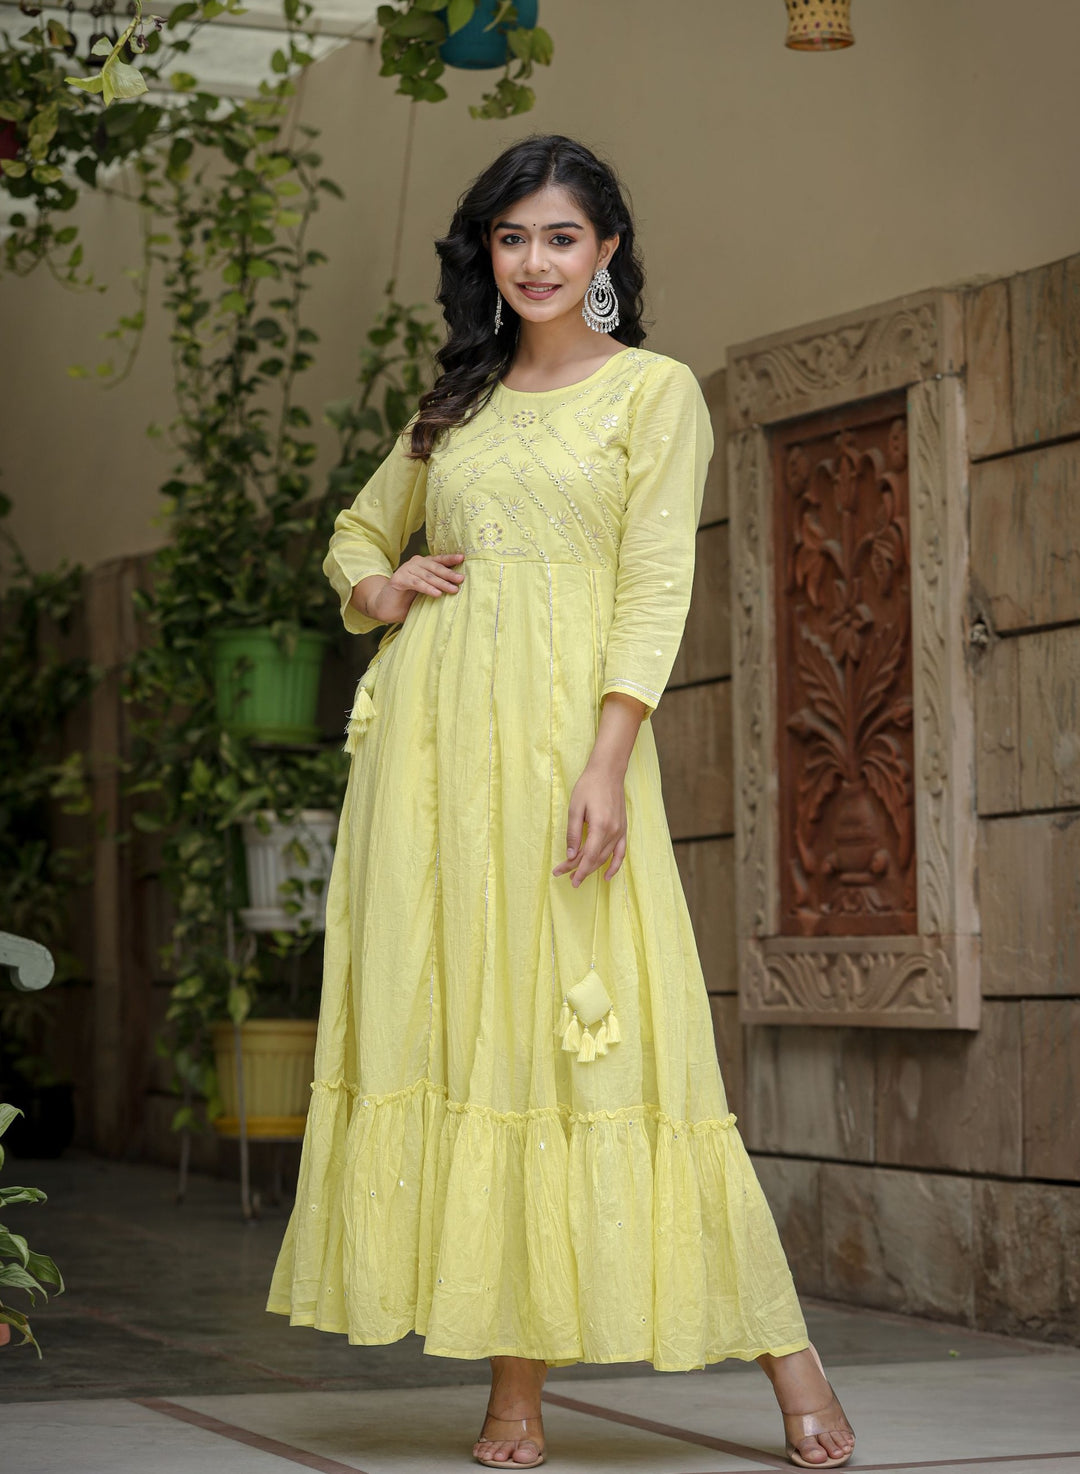 Buy a Designer Yellow Ethnic Gown online | Best Long Ethnic Dress for Women